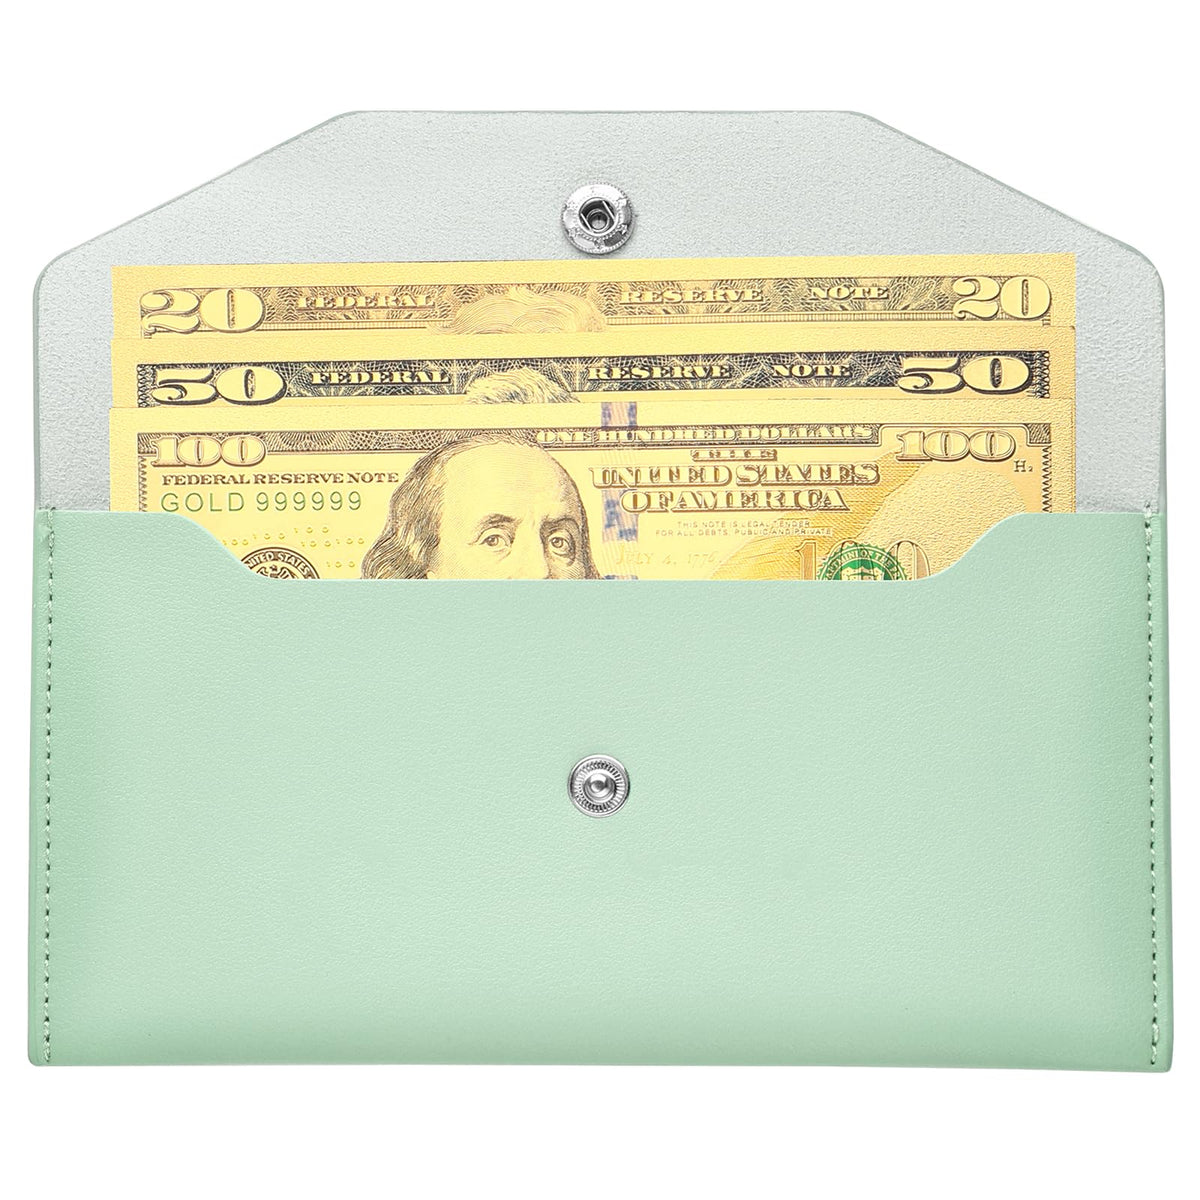 Molain Cash Envelopes PU Leather, Money Envelopes Reusable Waterproof Budget Envelopes Cash Wallet 6.9x3.5 in (Green)